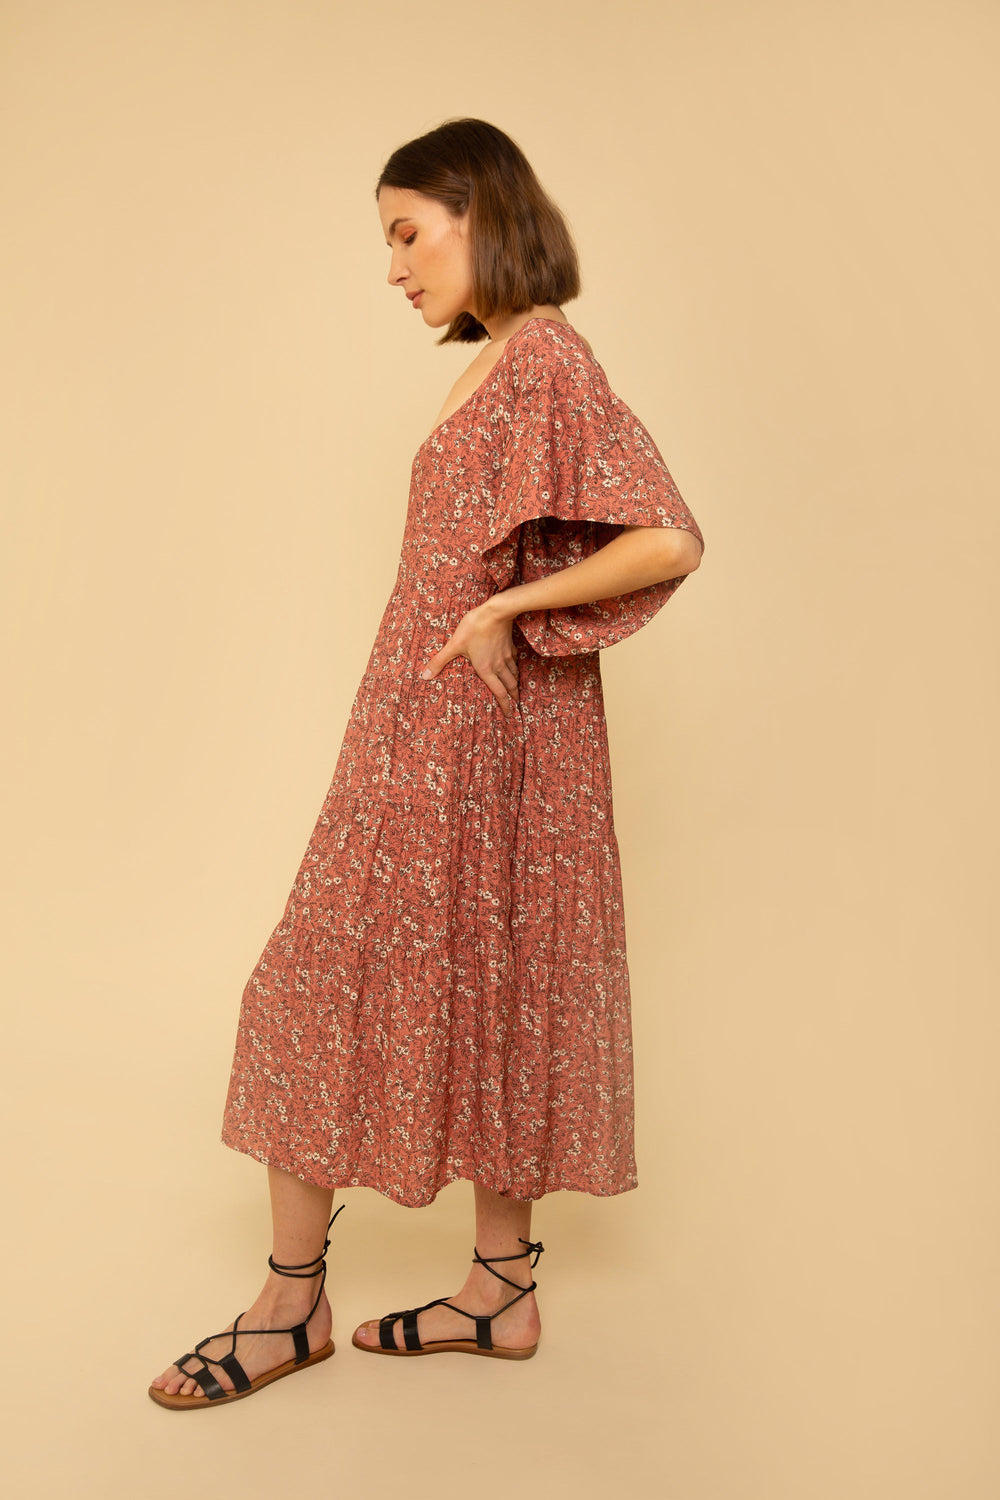 Rachel Dress in Terracotta Floral - Whimsy & Row